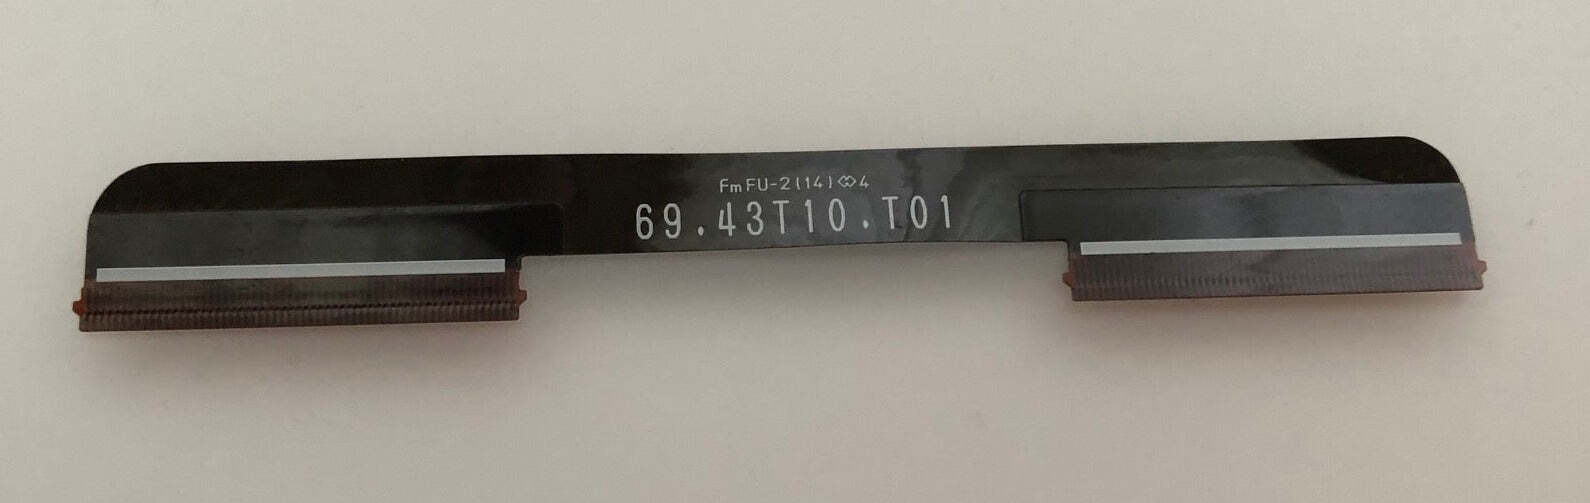 69.43T10.T01 RIBBON FOR SAMSUNG UE43TU6905K